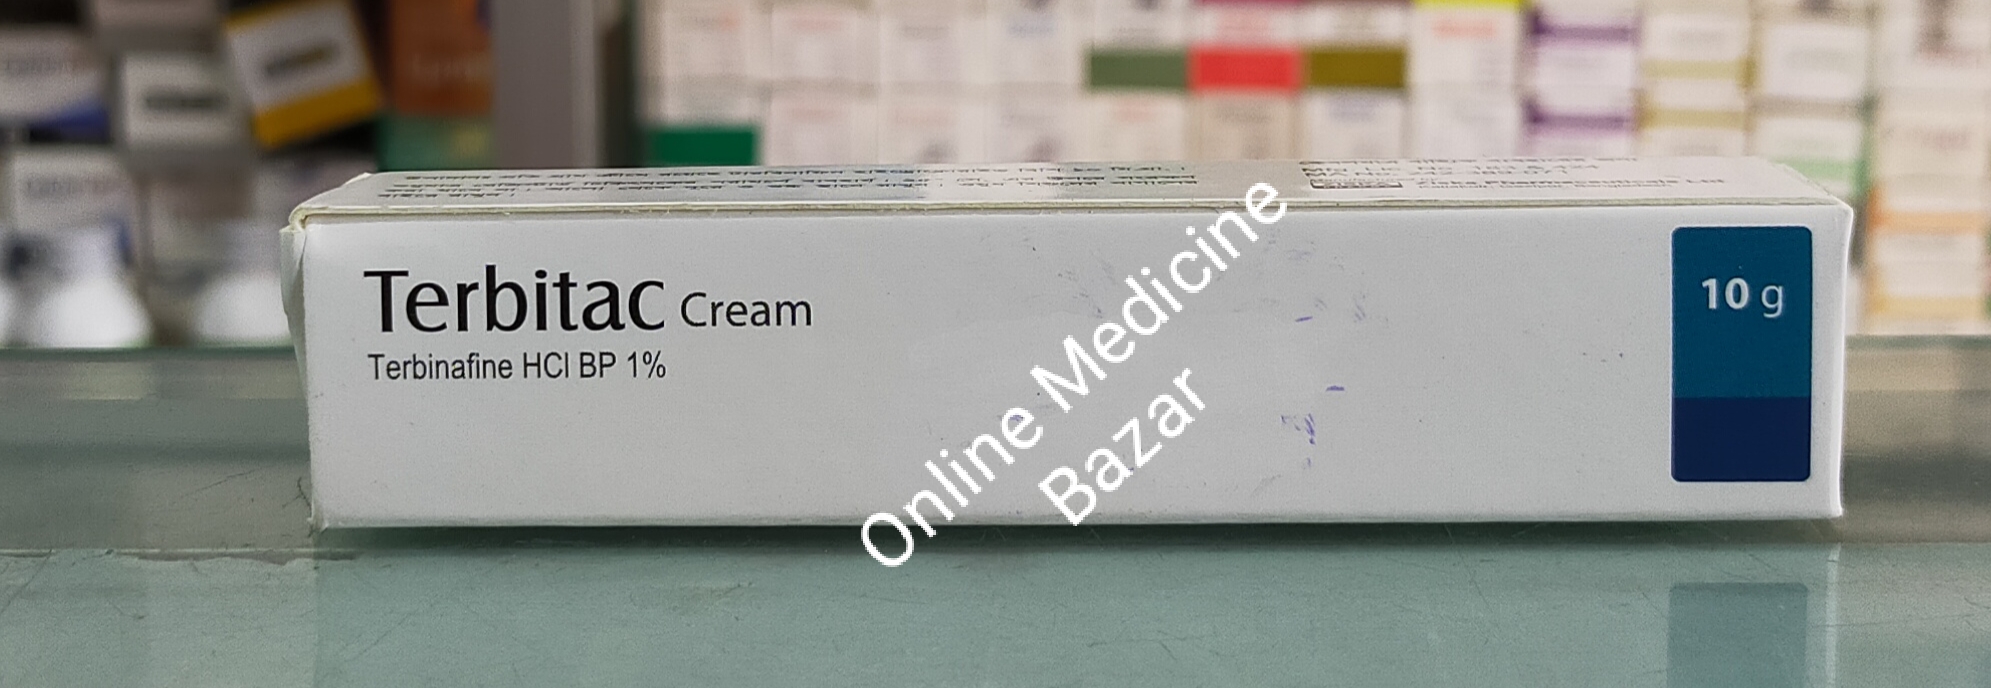 Terbitac Cream -10 gm tube